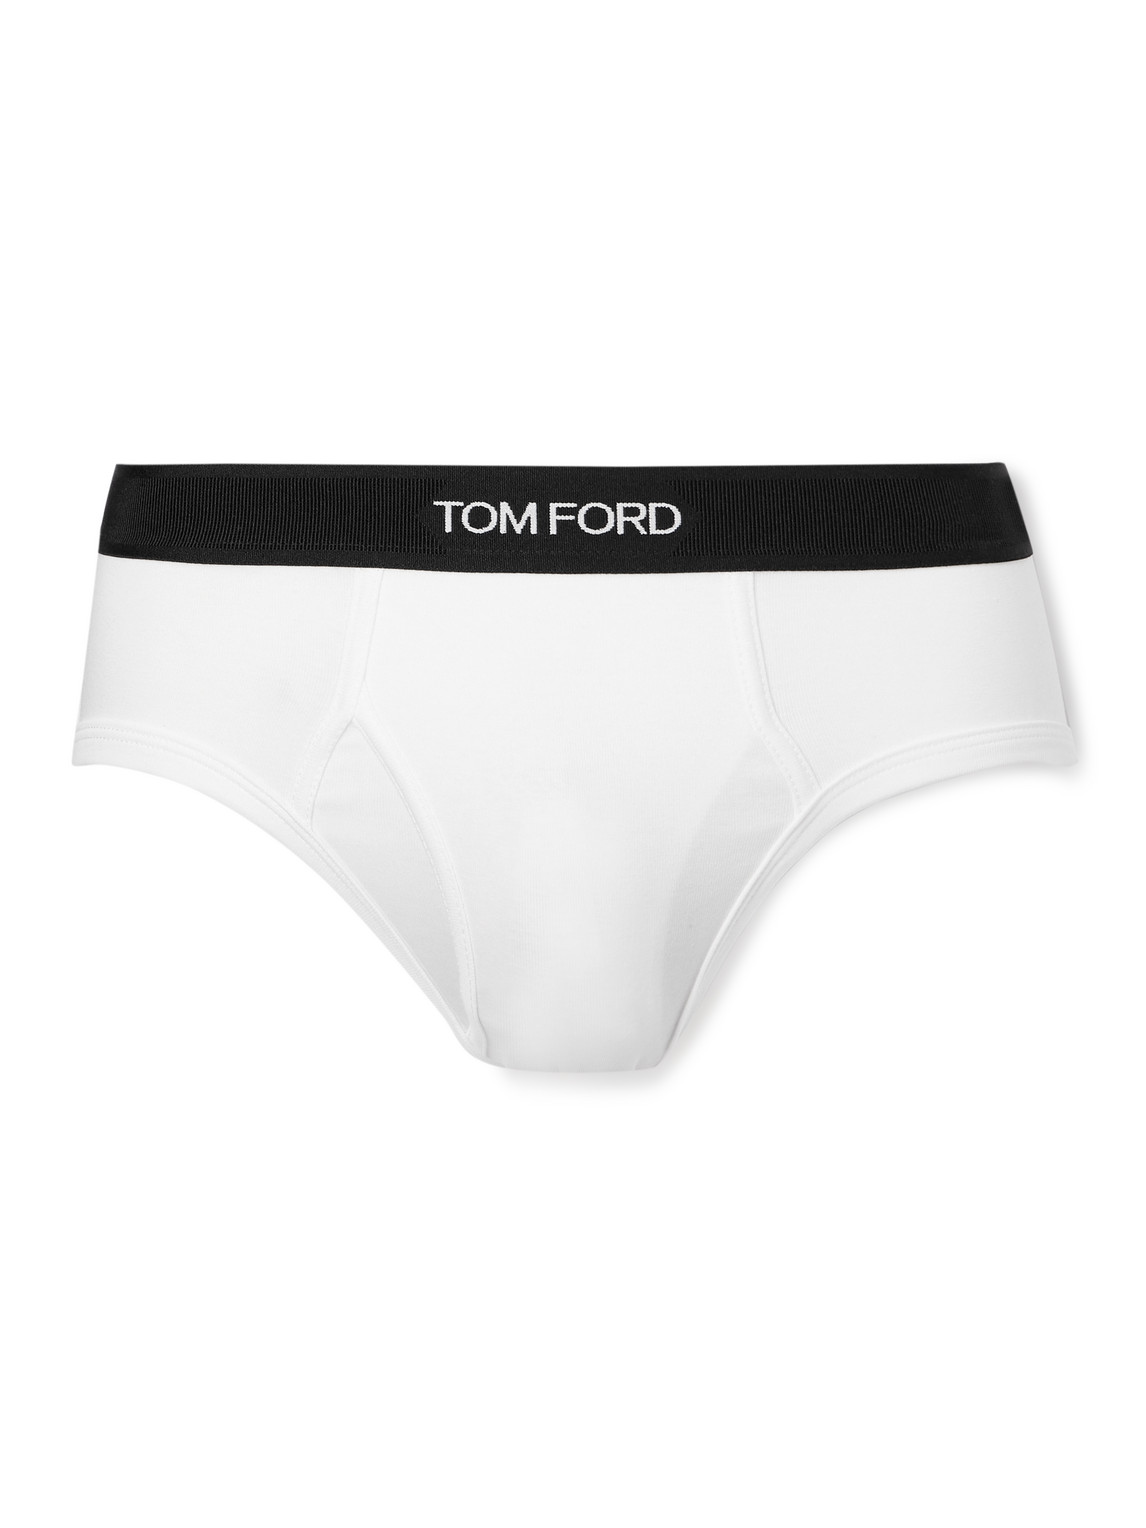 TOM FORD - Stretch-Cotton and Modal-Blend Briefs - Men - White - L von TOM FORD